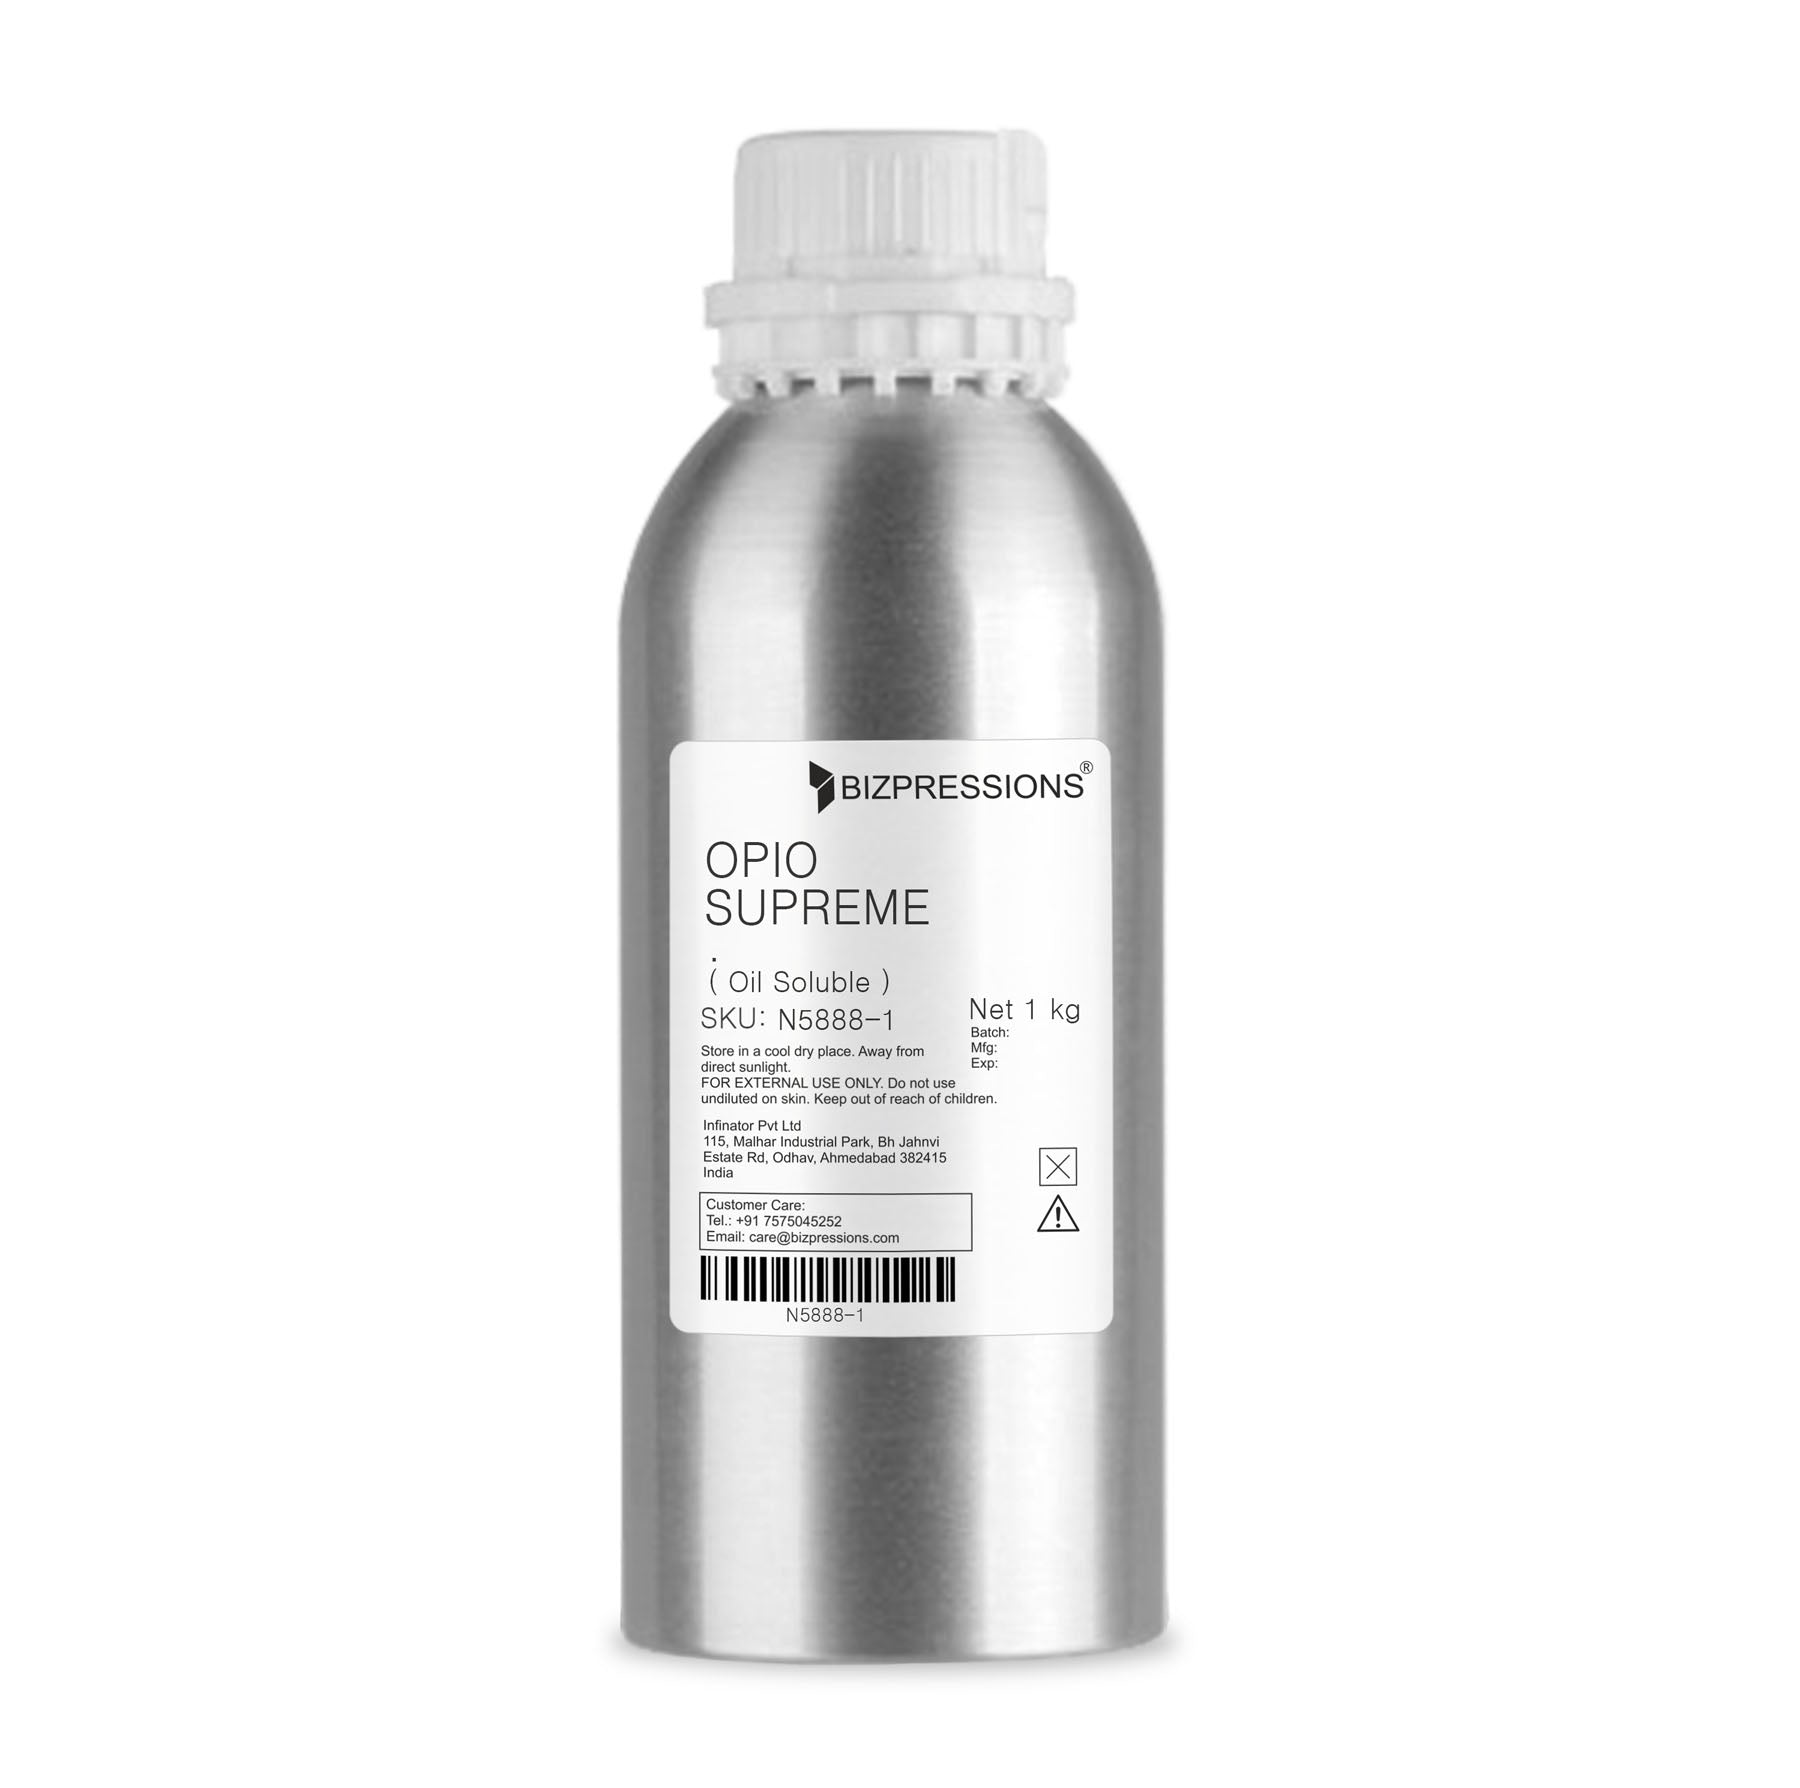 OPIO SUPREME - Fragrance ( Oil Soluble ) - 1 kg